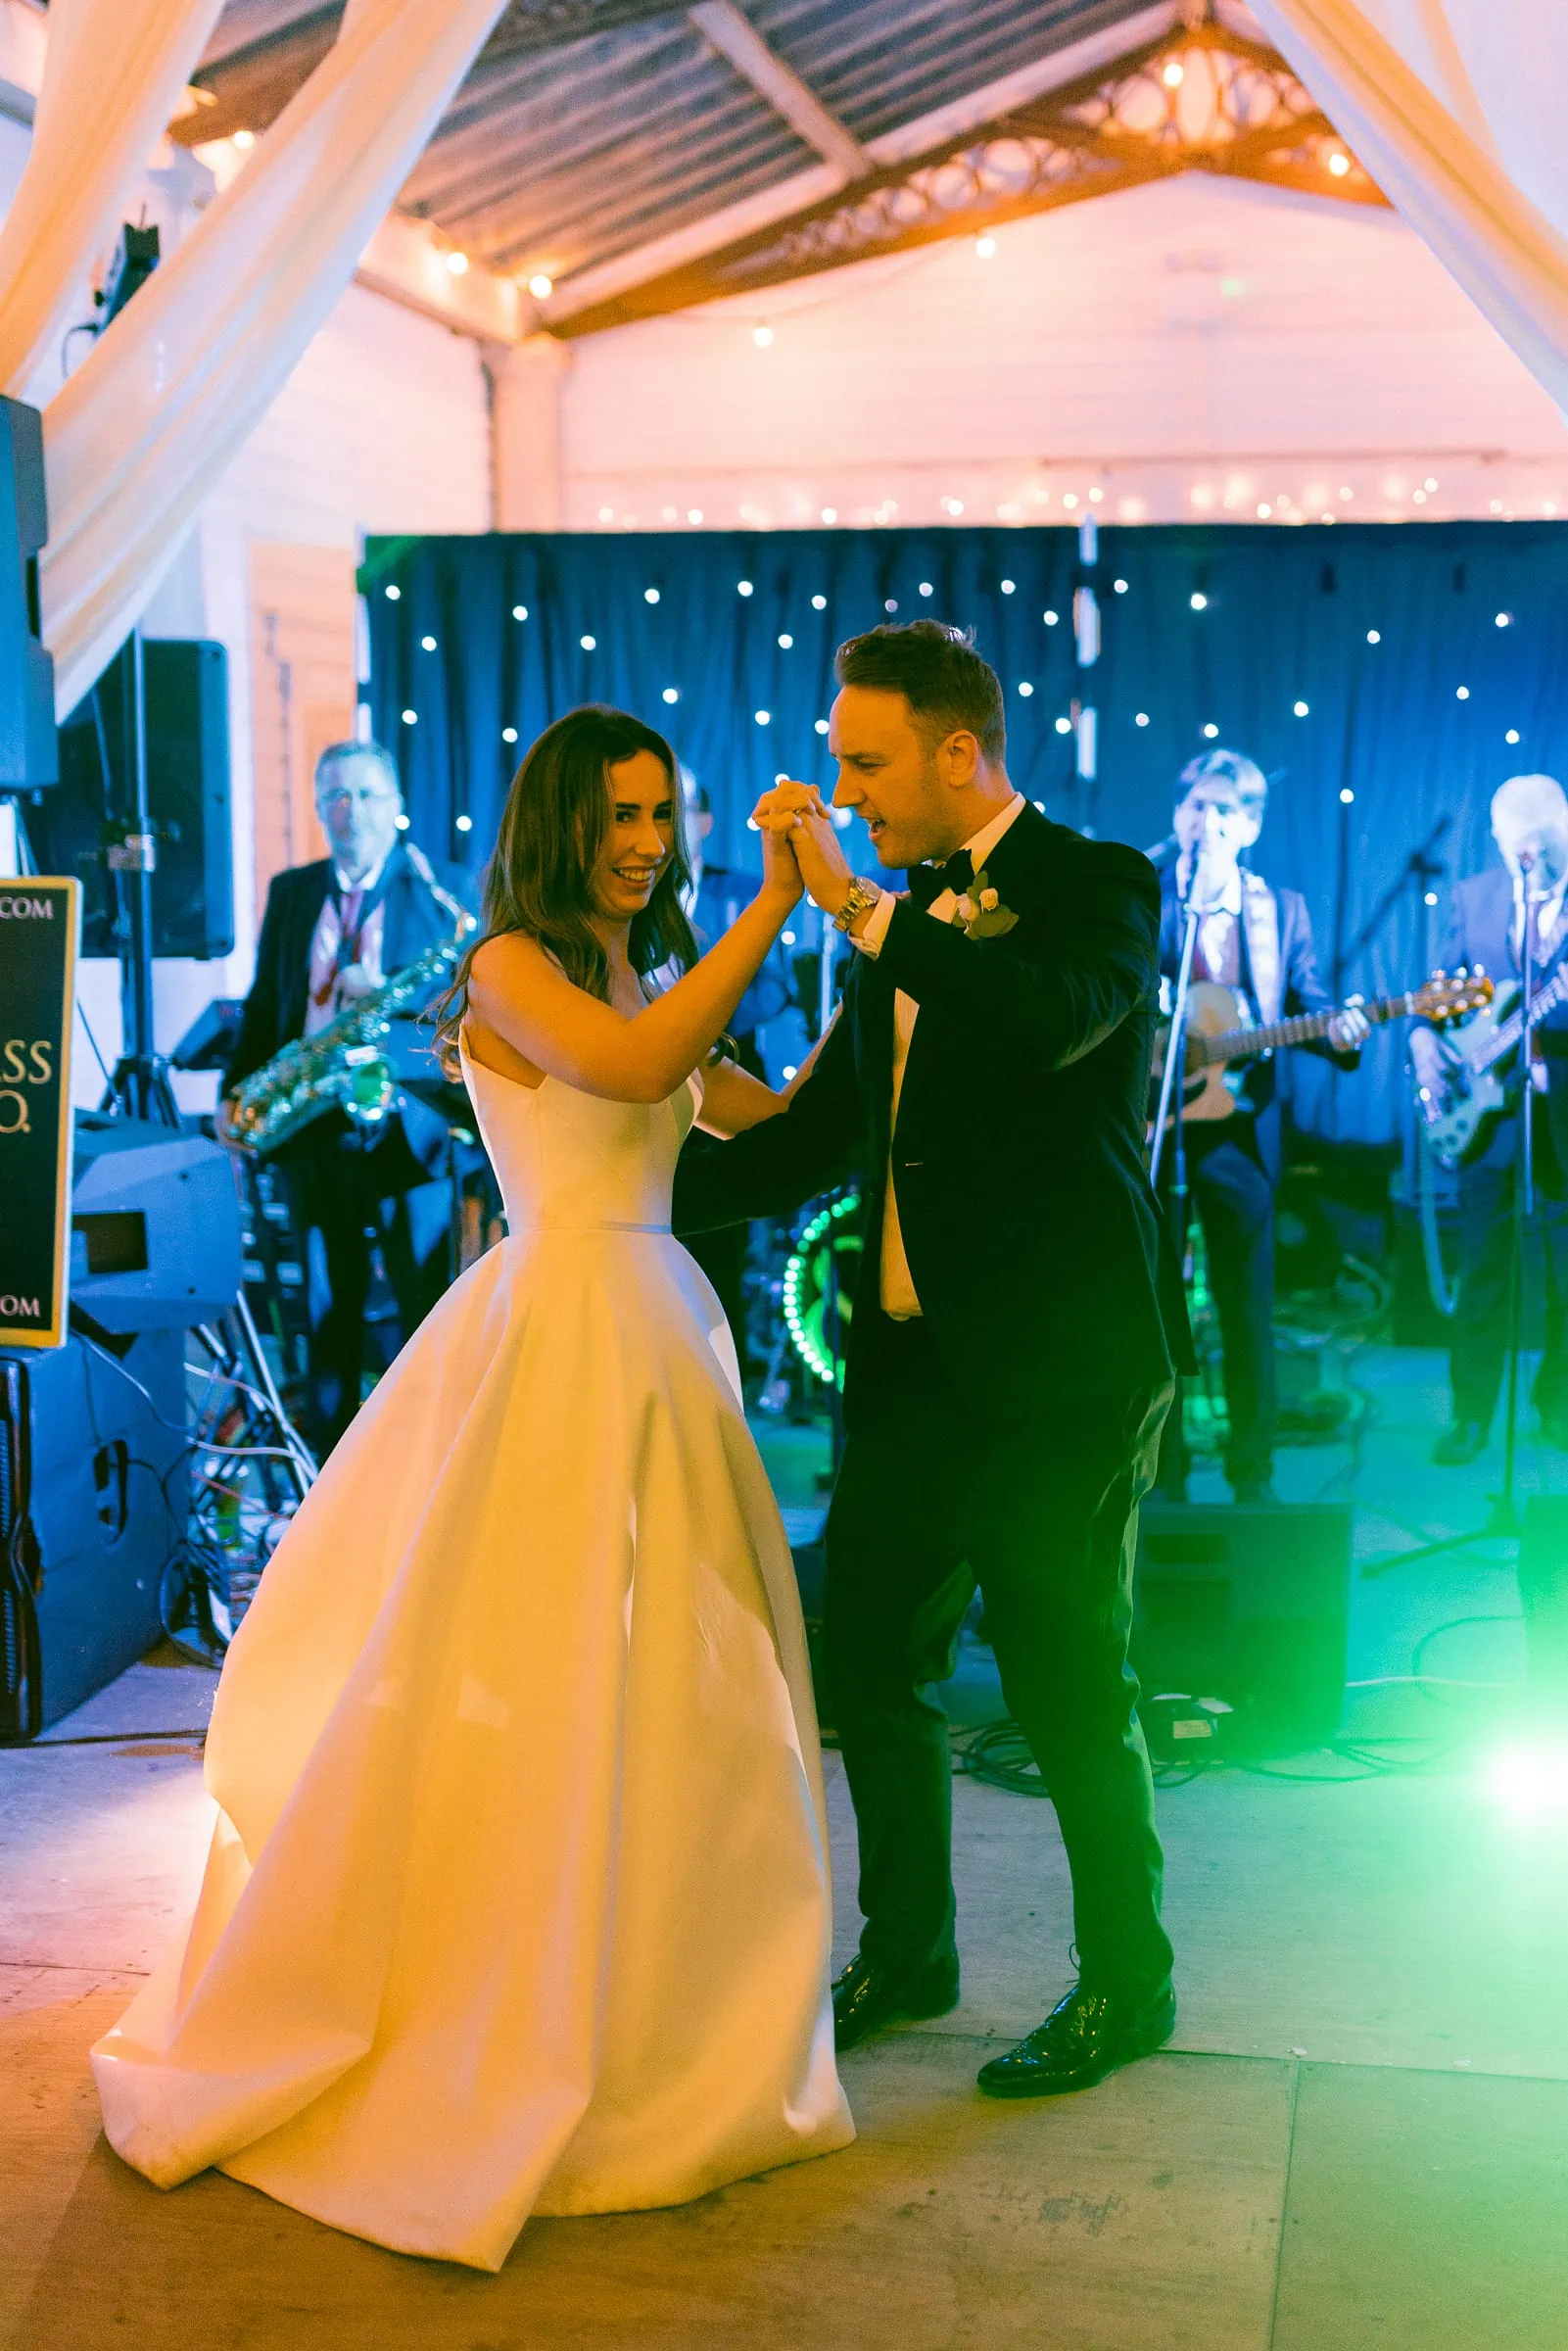 reception speeches forst dance hilton park wedding 115